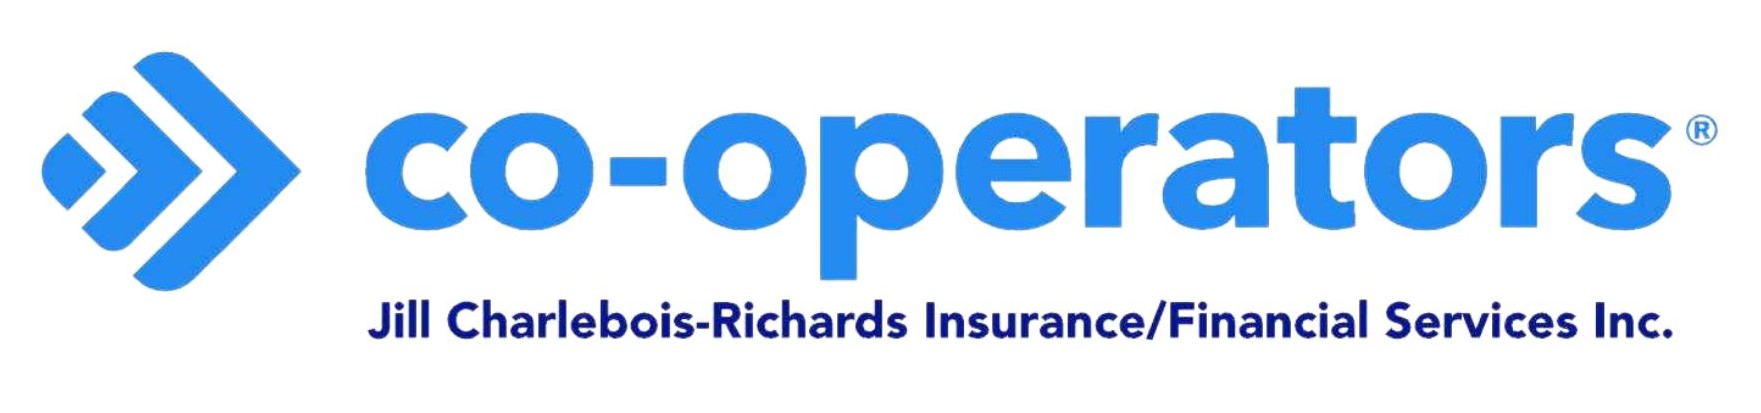 Co-operators  logo